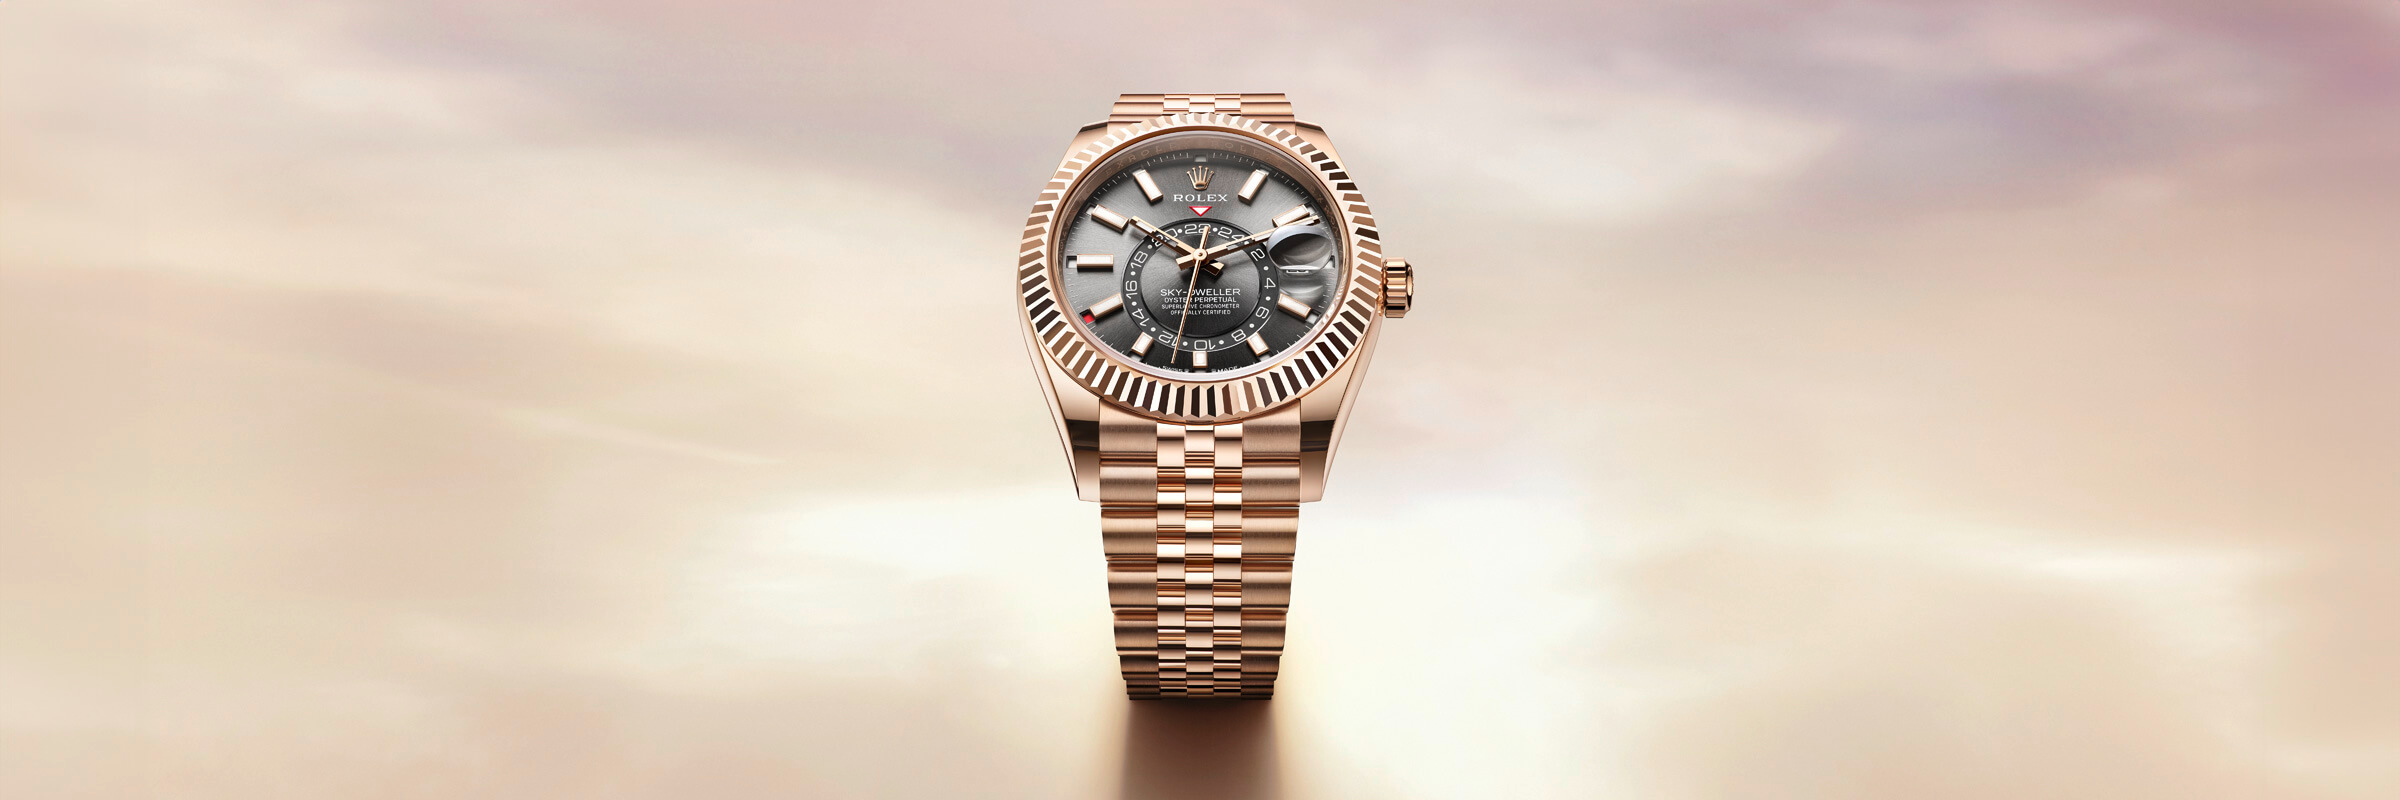 rolex sky-dweller in 18 ct everose gold, m336935-0008 - global watch company